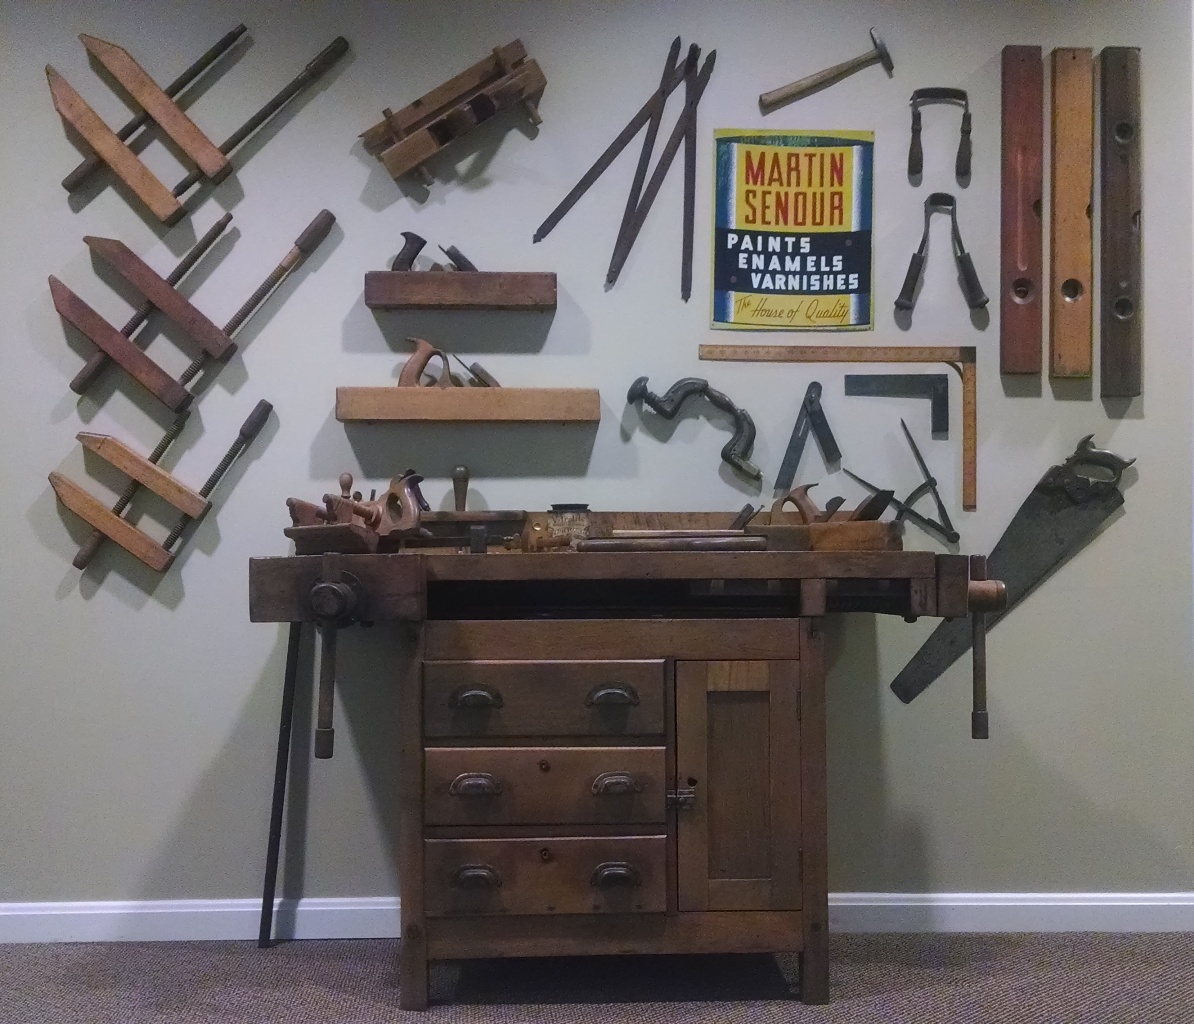 Old World tools